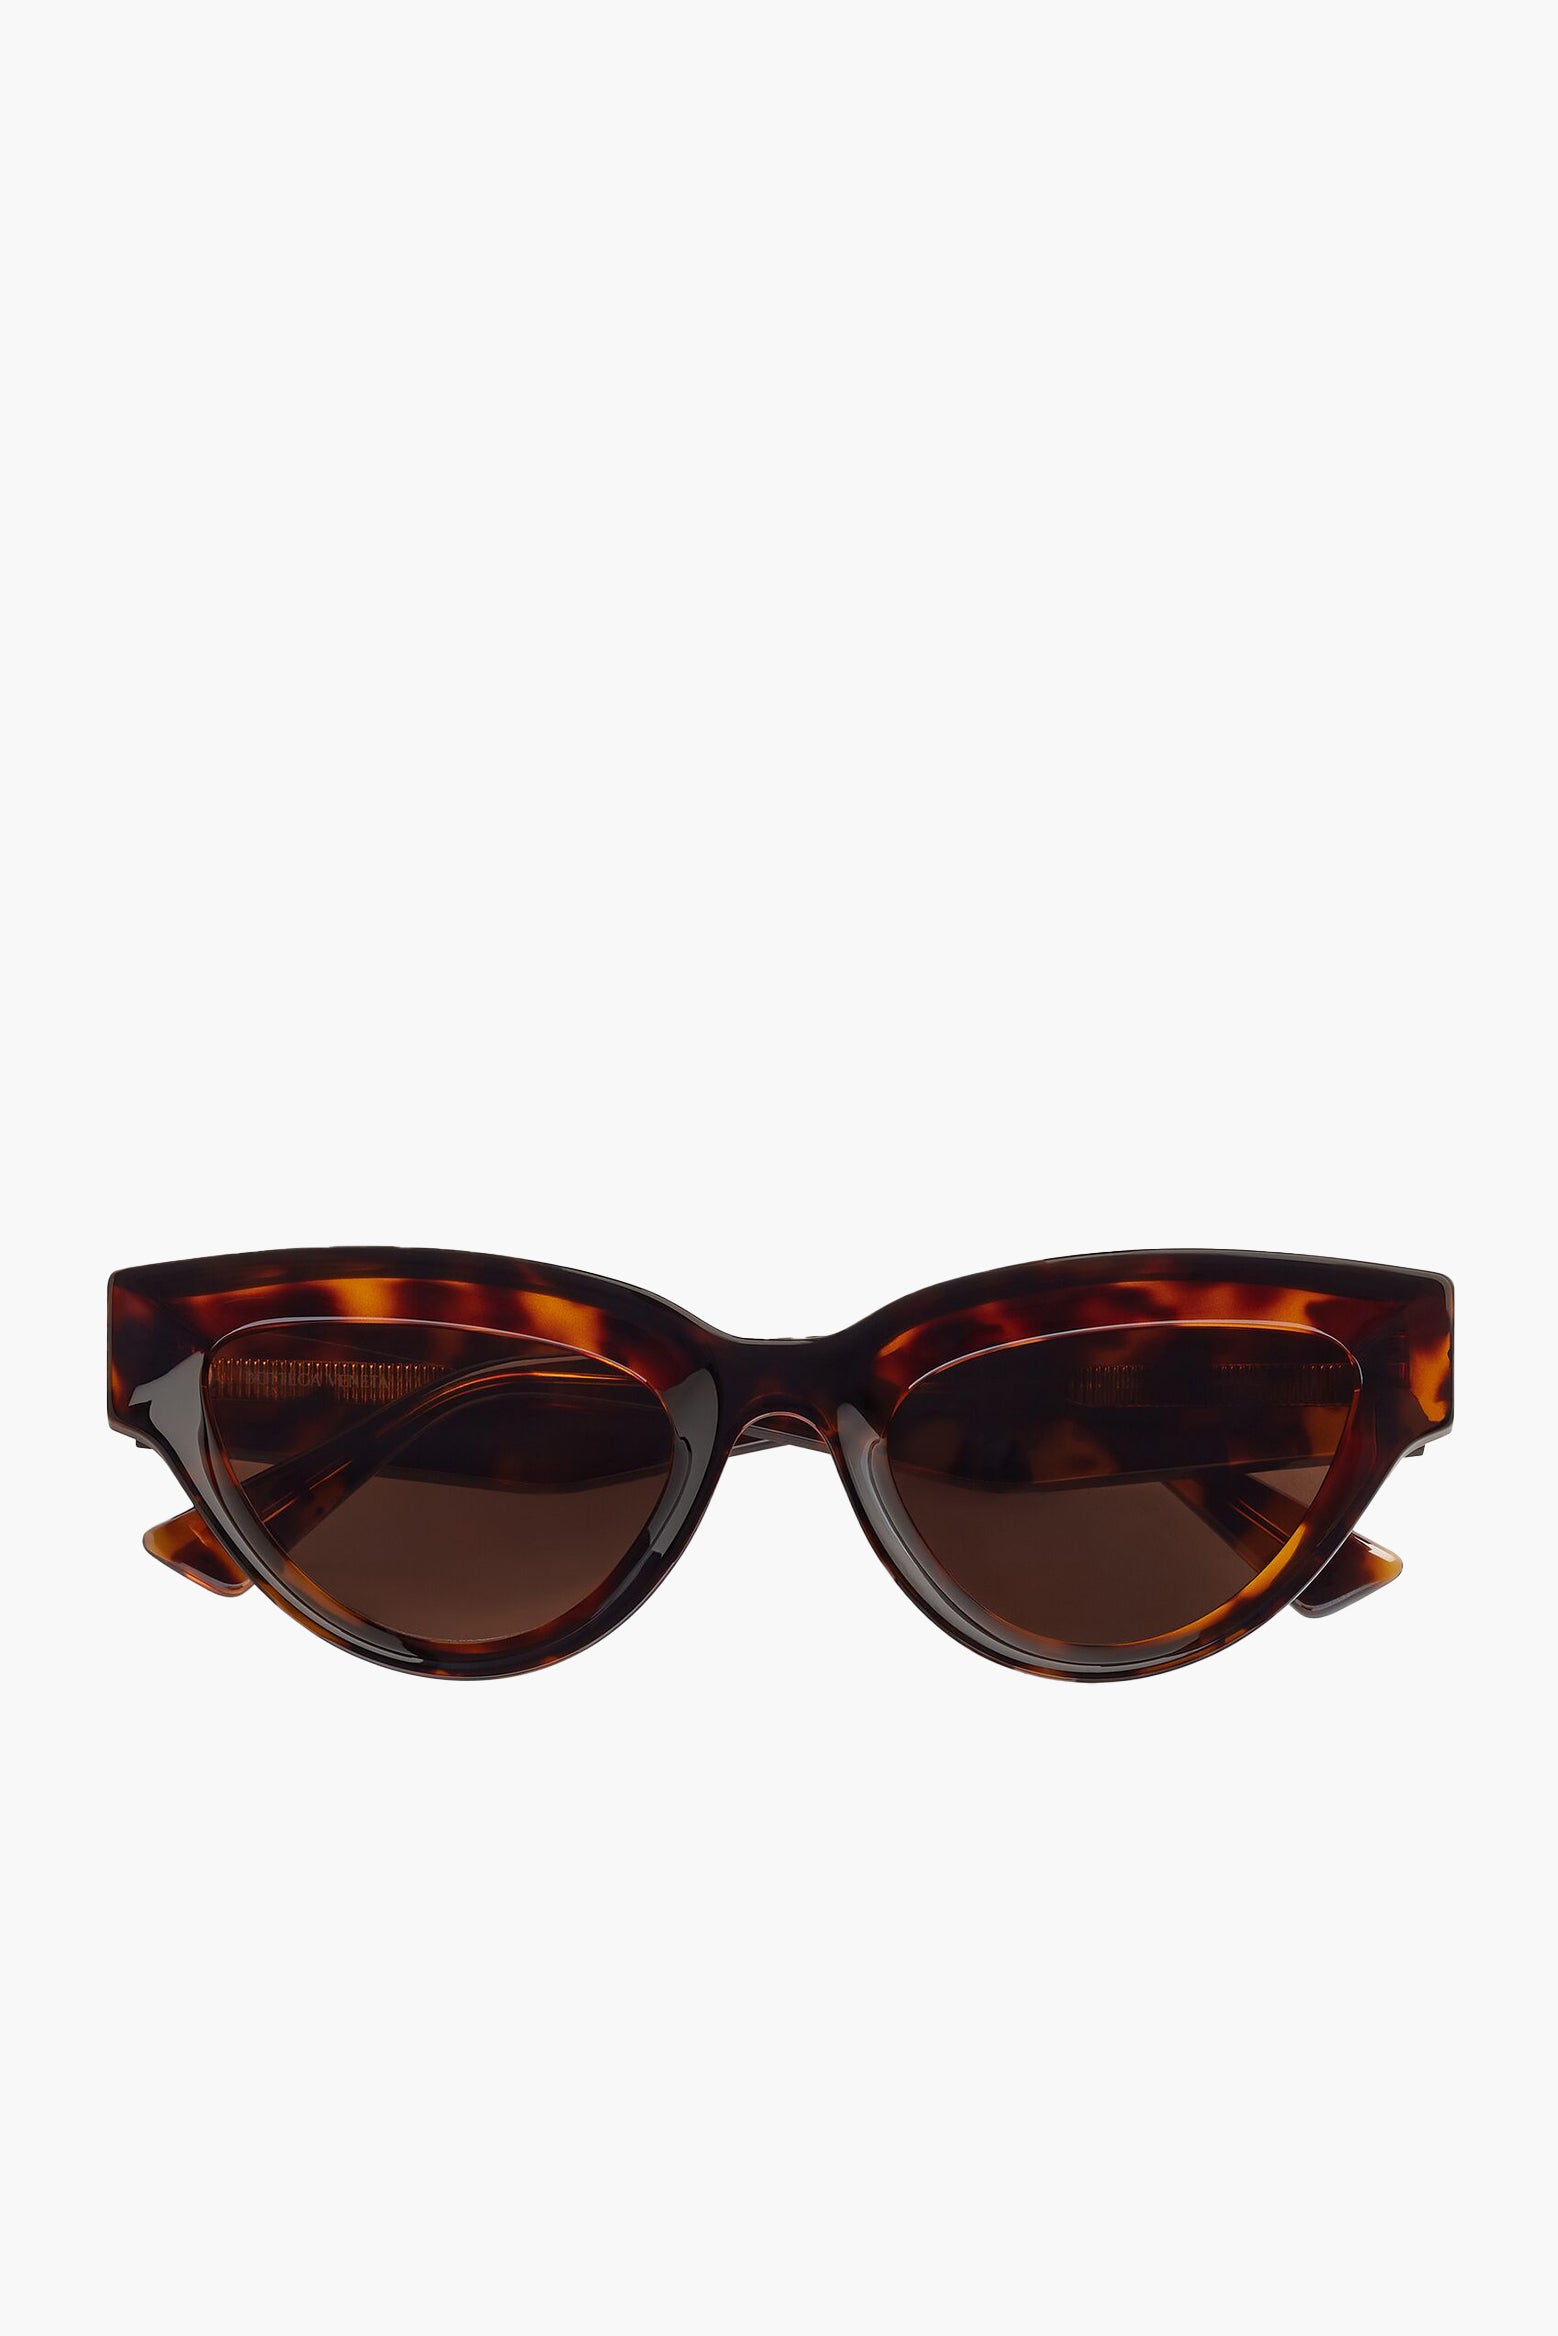 Bottega Veneta Sharp Cat Eye Sunglasses in Havana Brown available at The New Trend Australia.